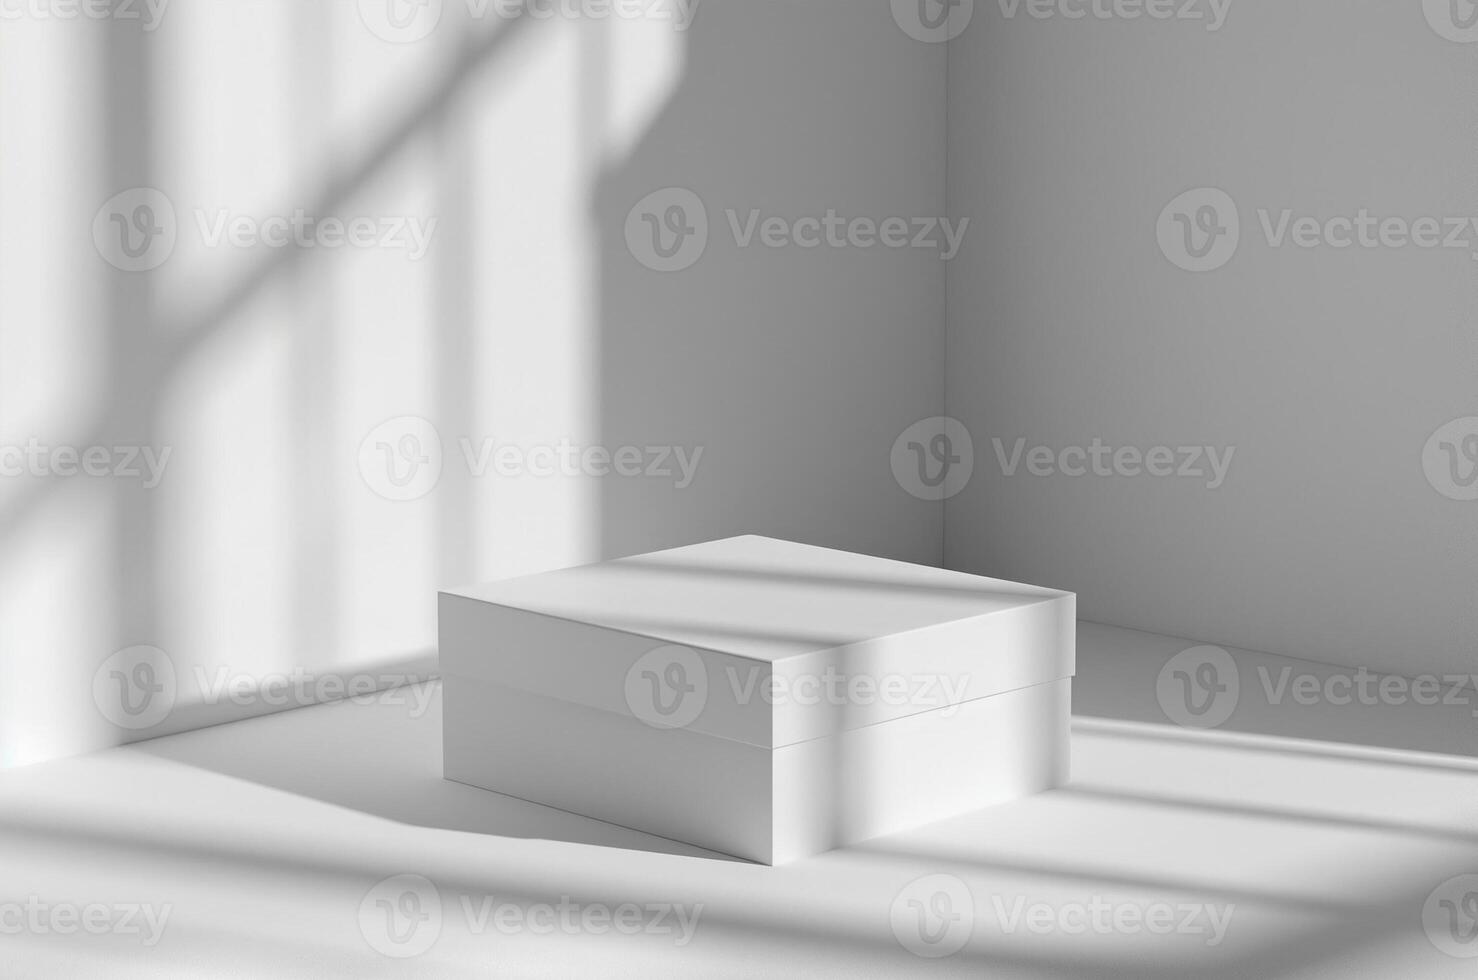 Bosquejo blanco caja, ventana oscuridad foto